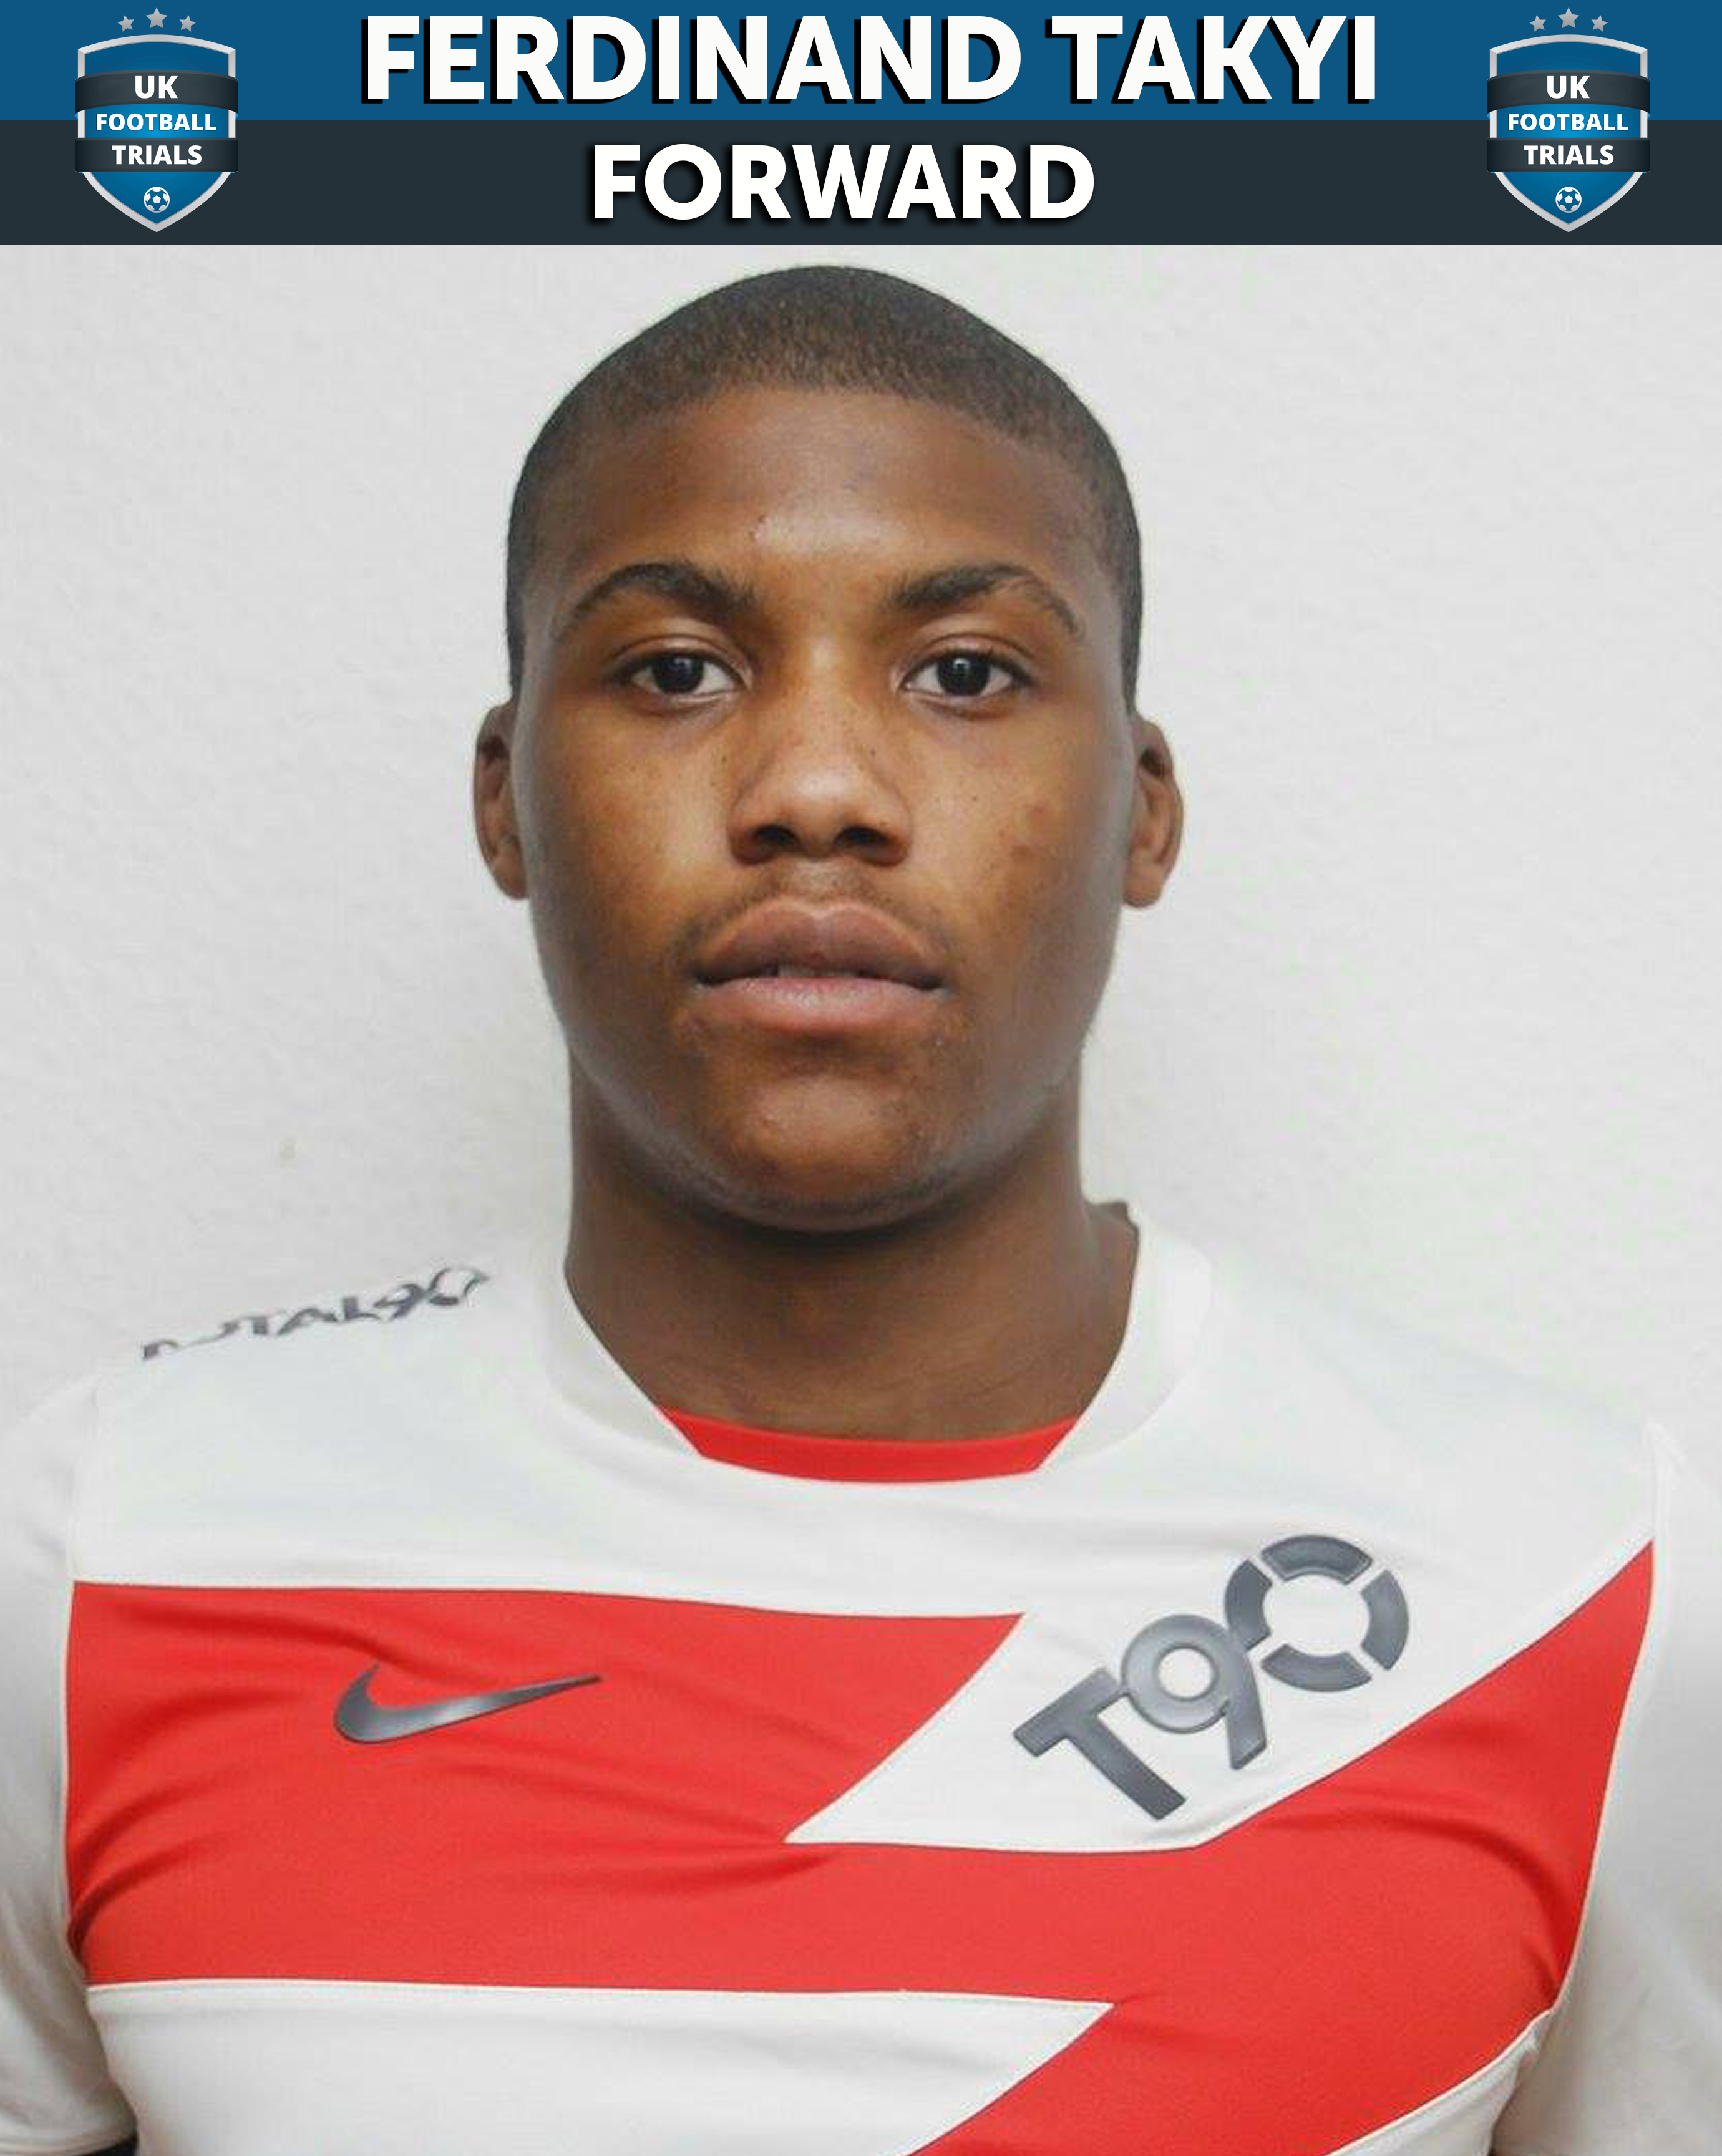 Ferdinand Takyi - Aged 21 - Played Europa League